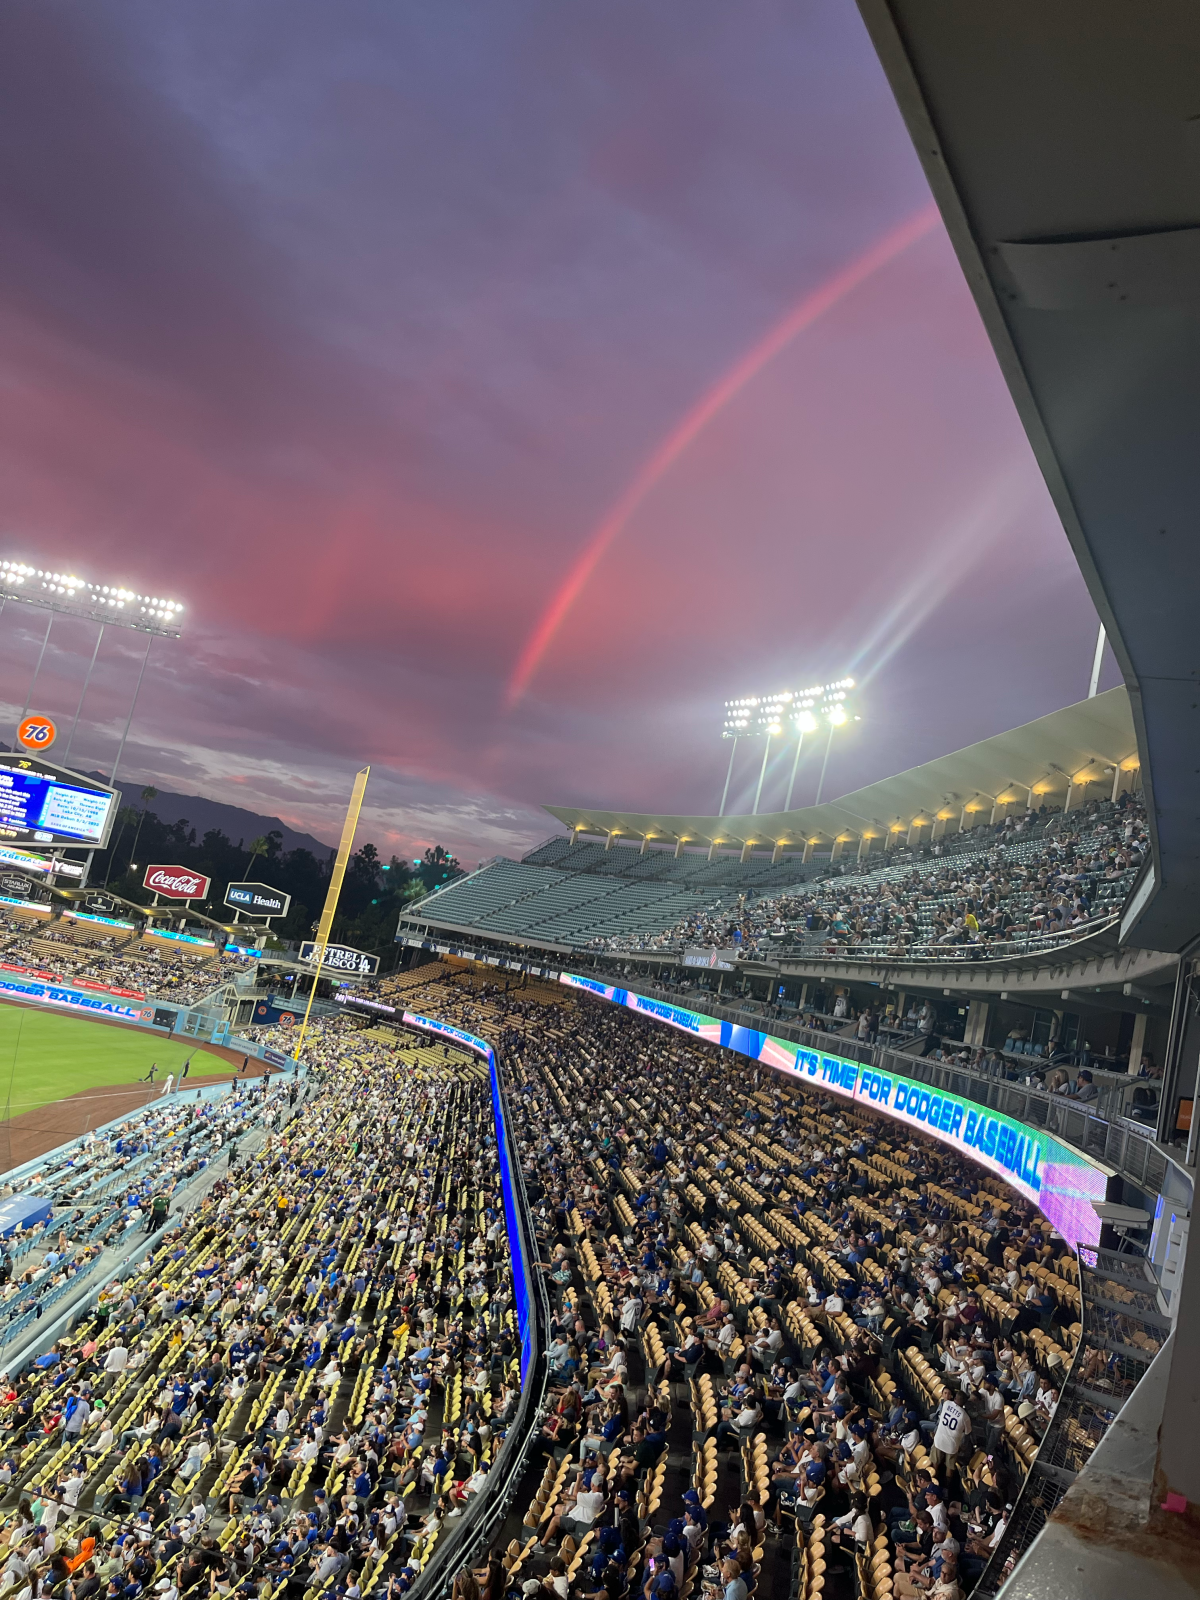 A rainbow as seen from Dodger Stadium.